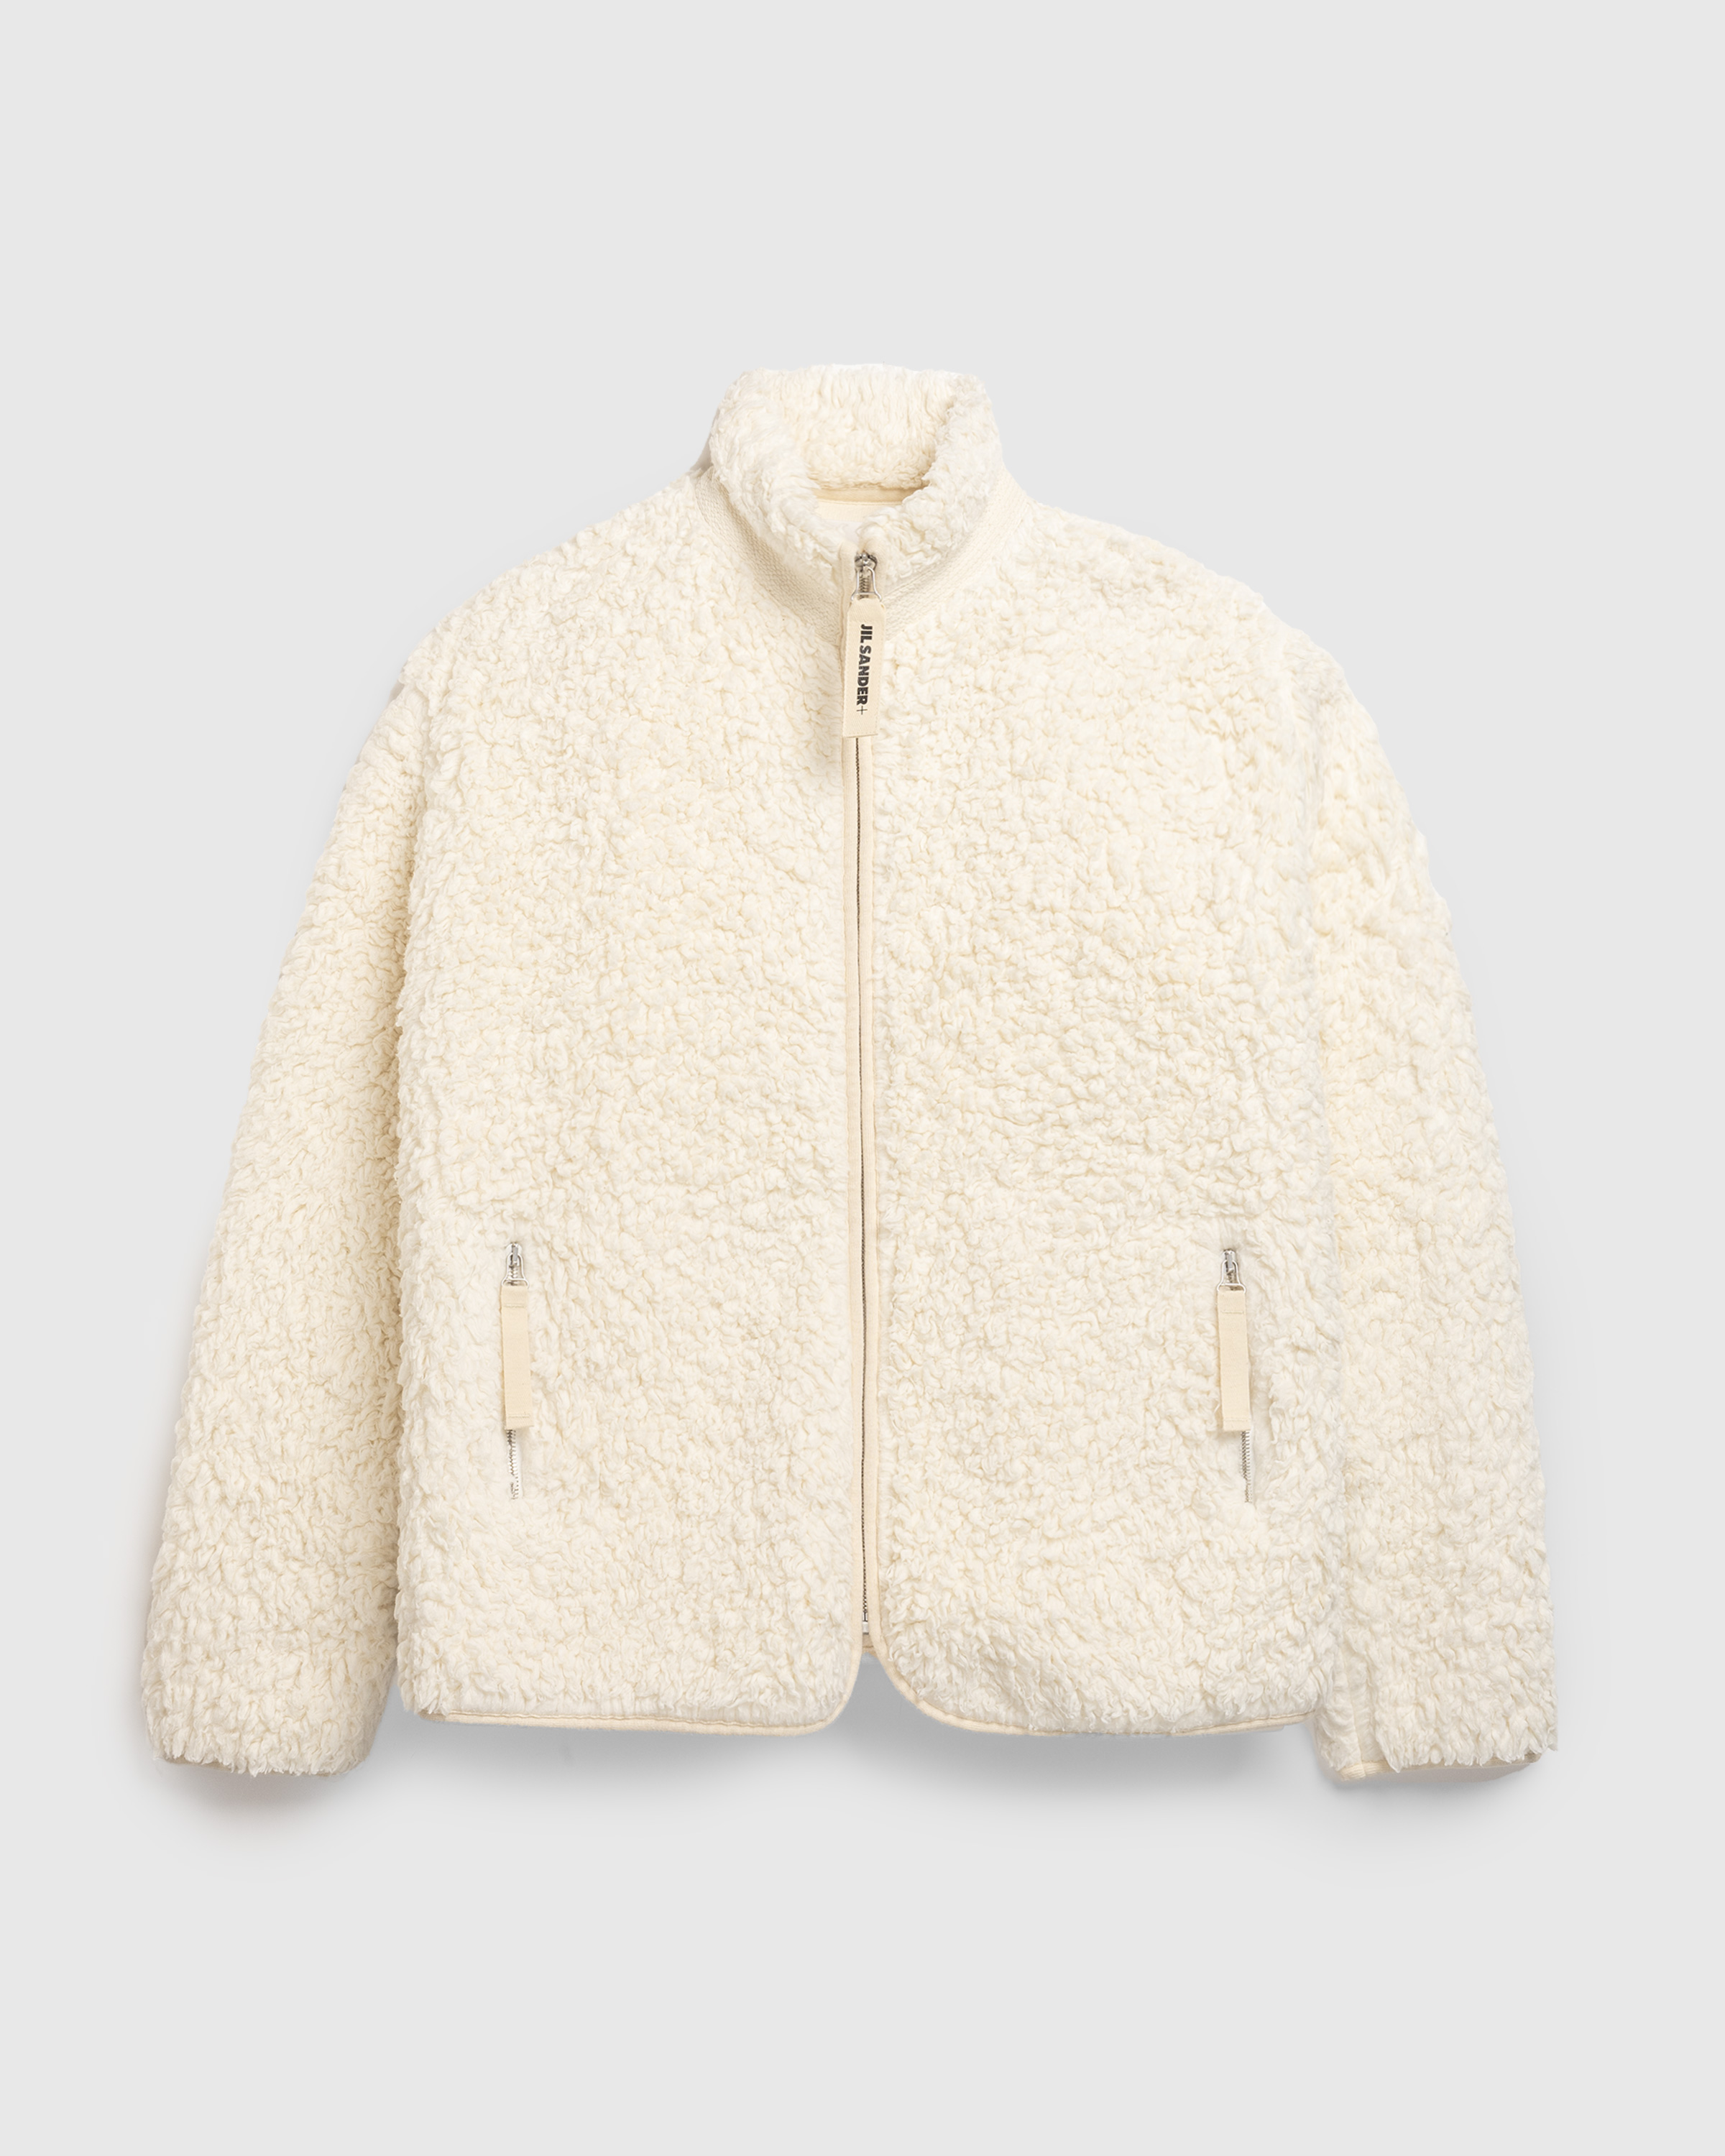 Jil Sander – Zip-Up Jacket Eggshell - Knitwear - White - Image 1